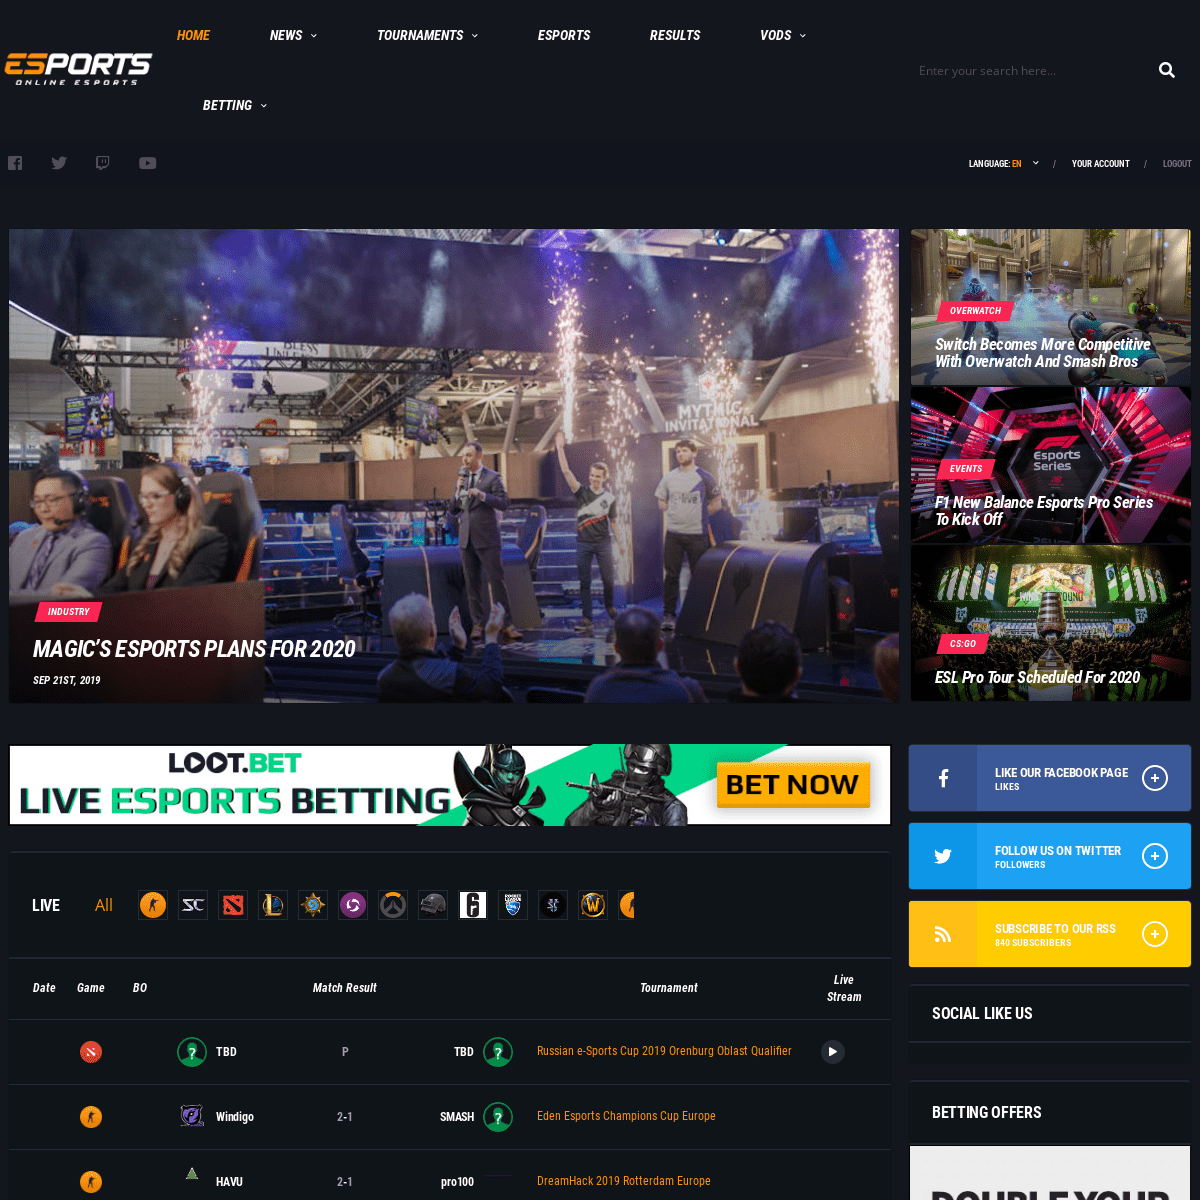  Esports News - Live Scores, VODS, Tournaments Games- OnlineeSports.com 